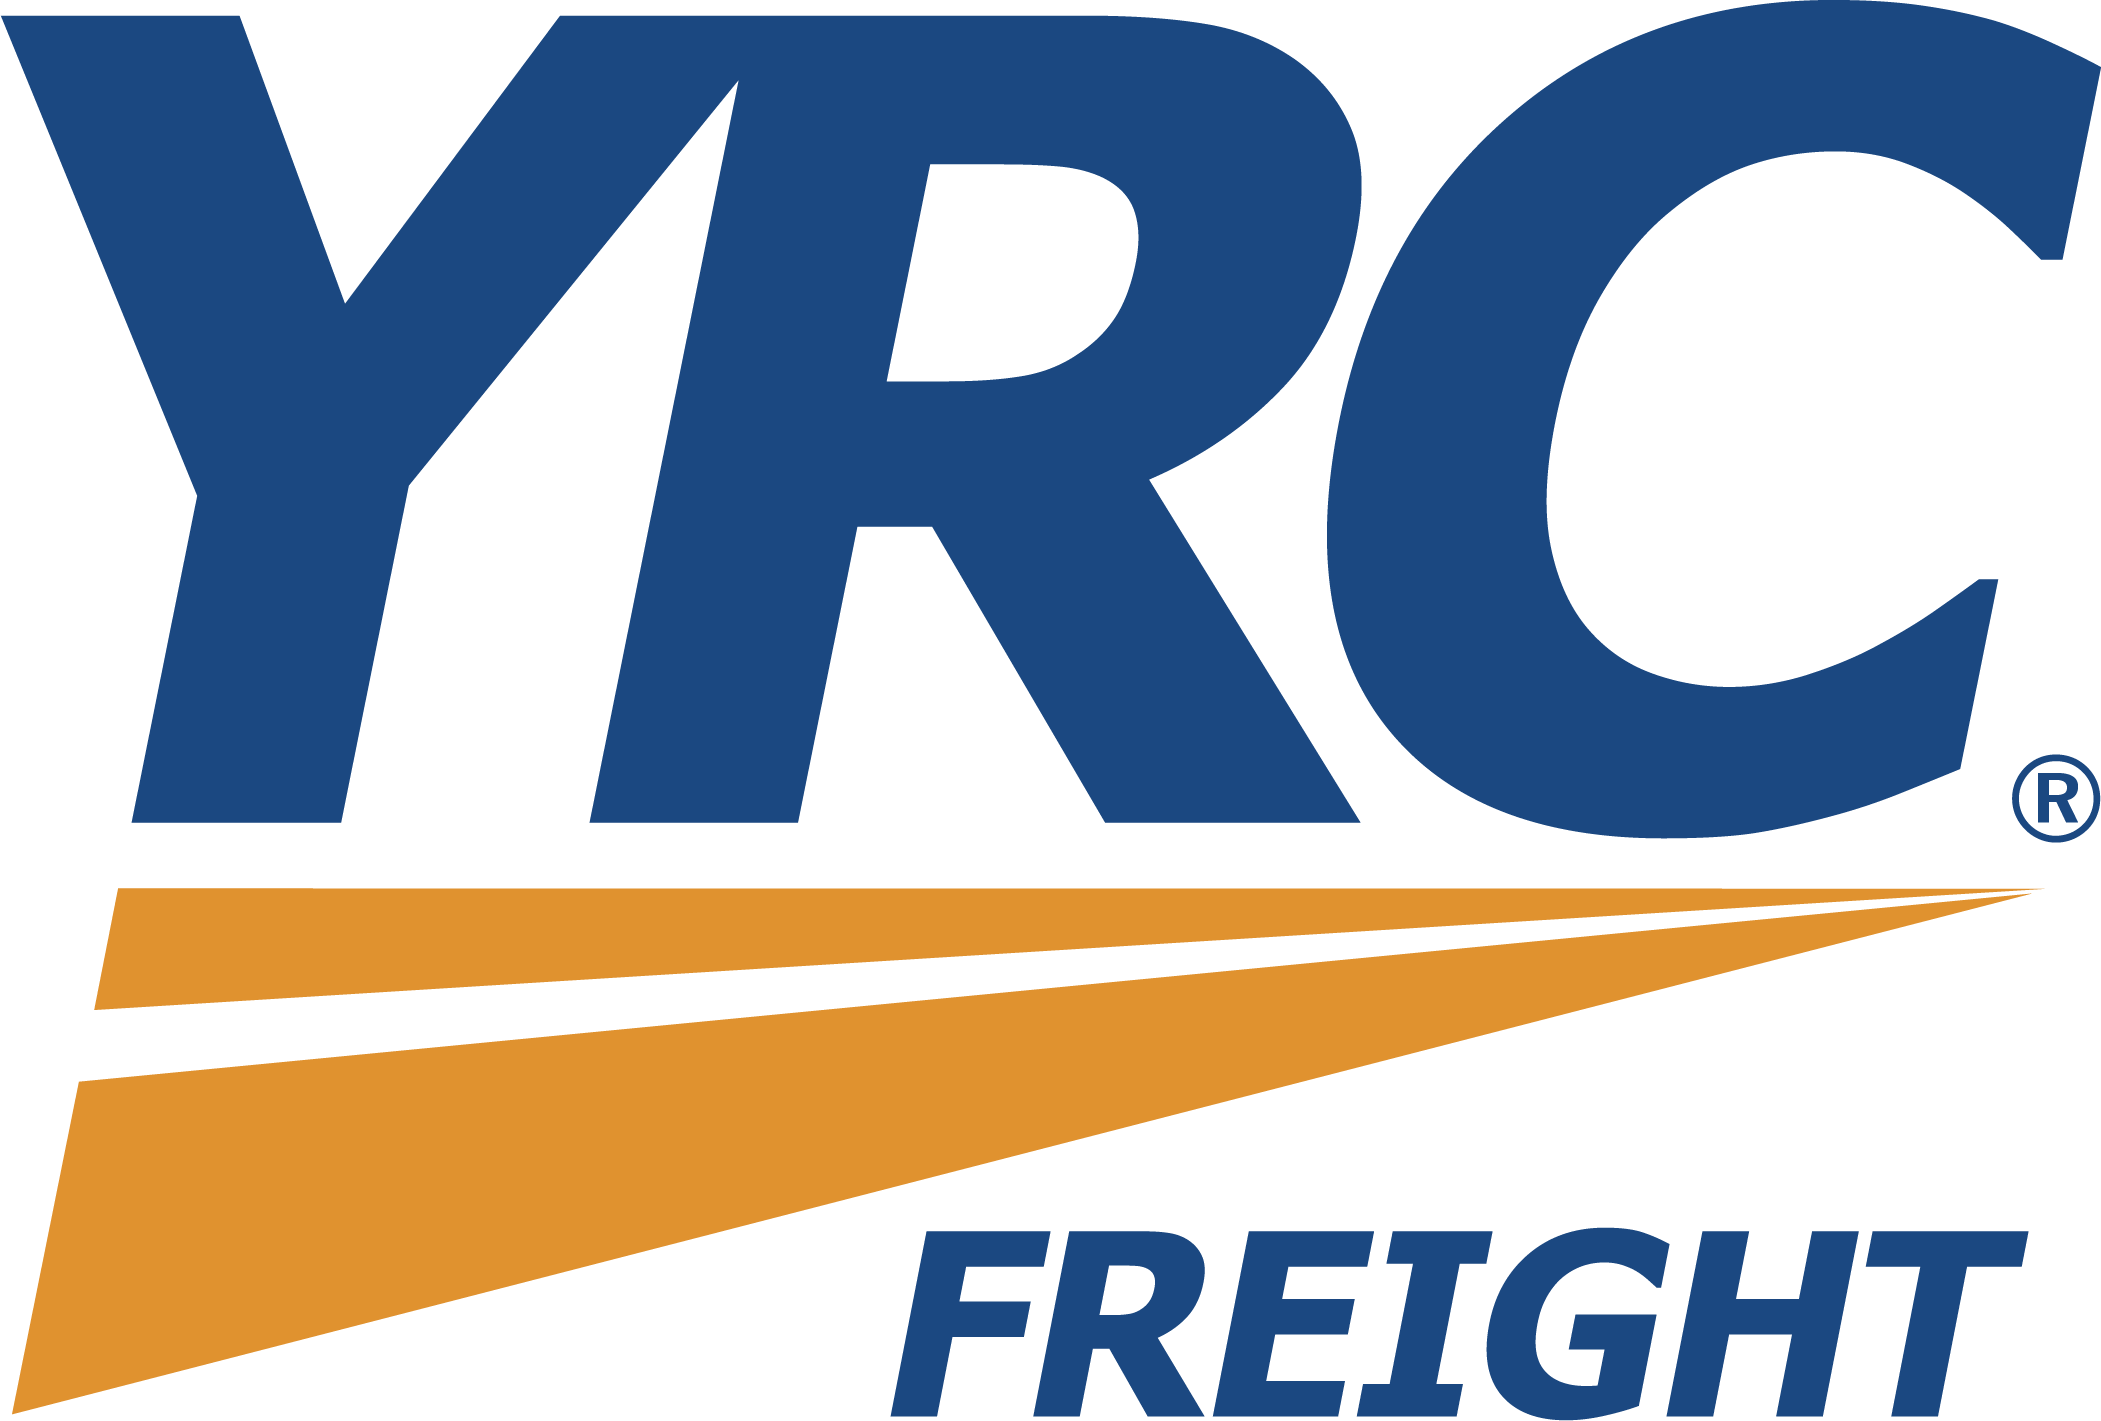 YRC Freight Logo - Logos and Photos | YRC Freight - The Original LTL Carrier Since 1924